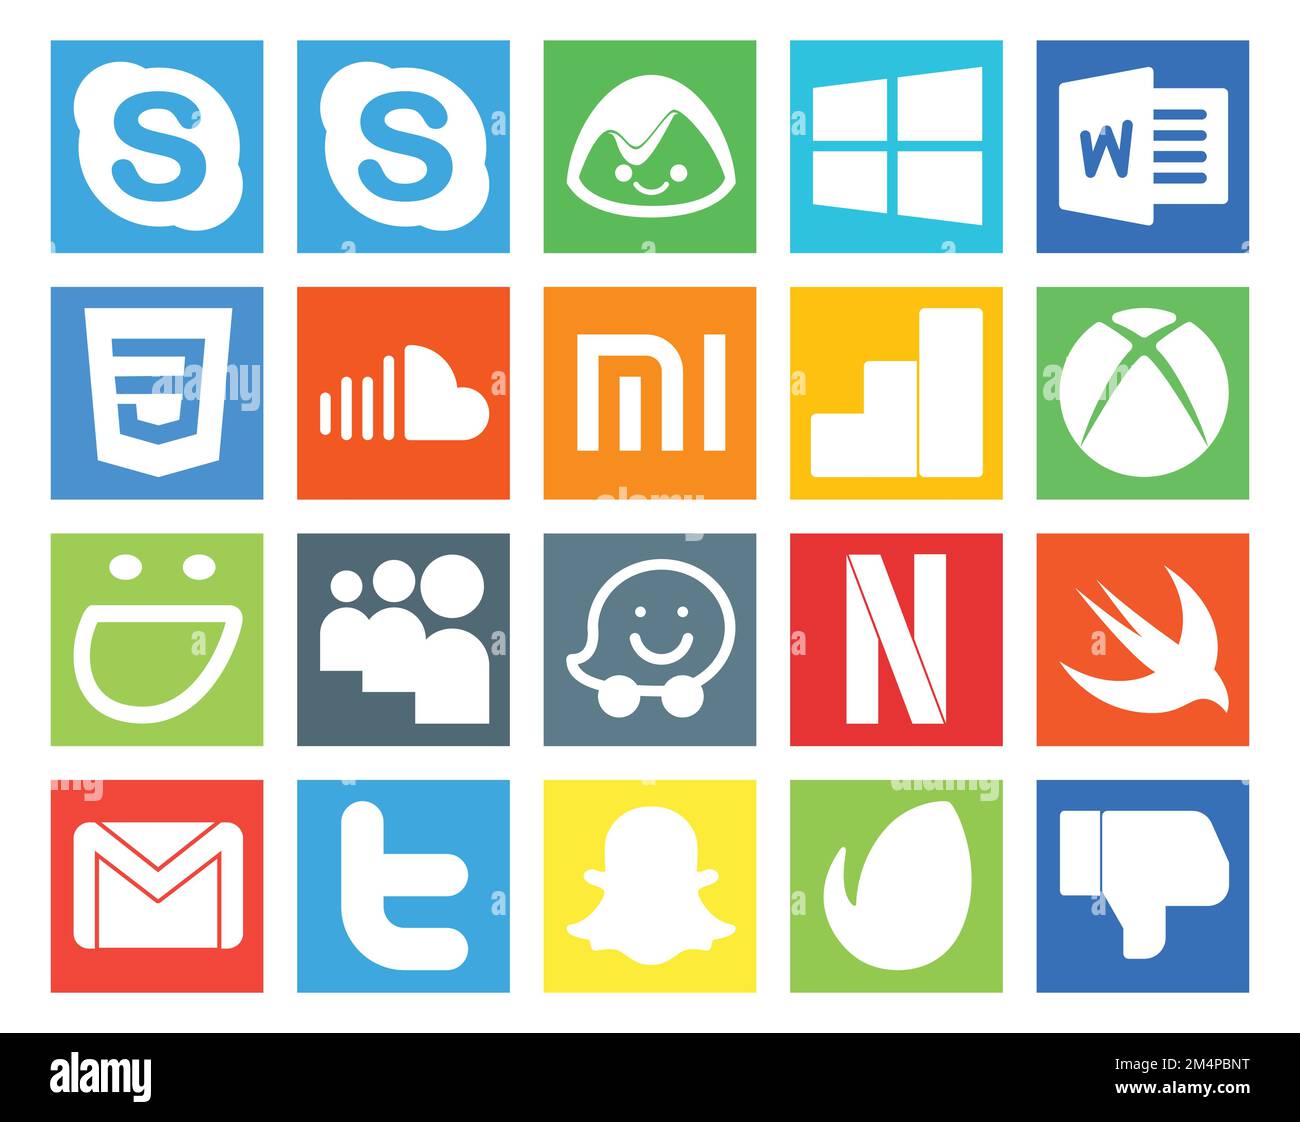 20 Social Media Icon Pack Including gmail. netflix. music. waze. smugmug Stock Vector